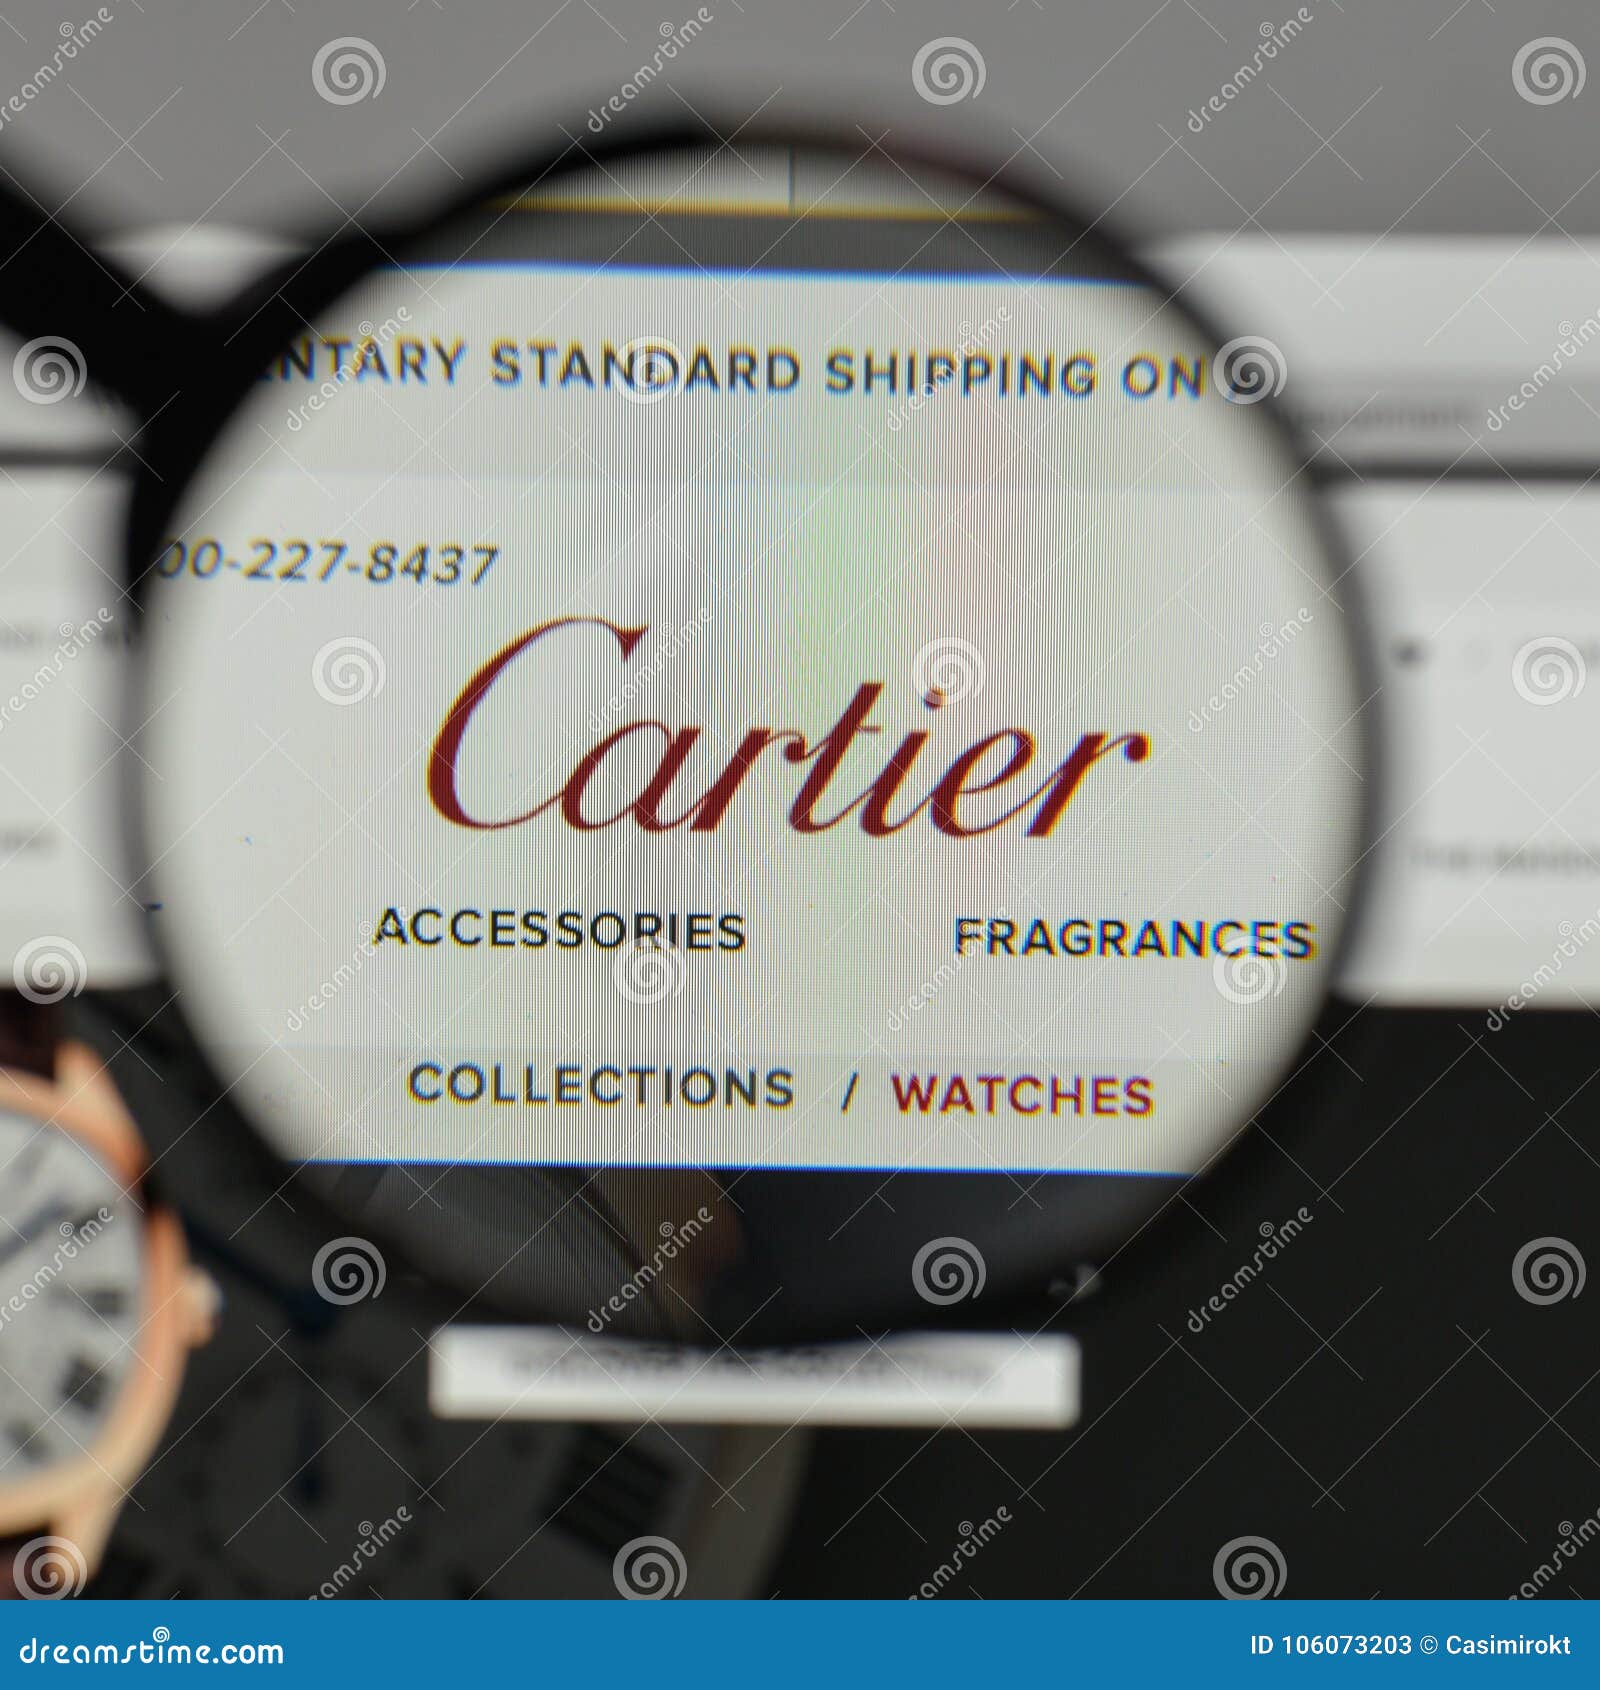 cartier italy website